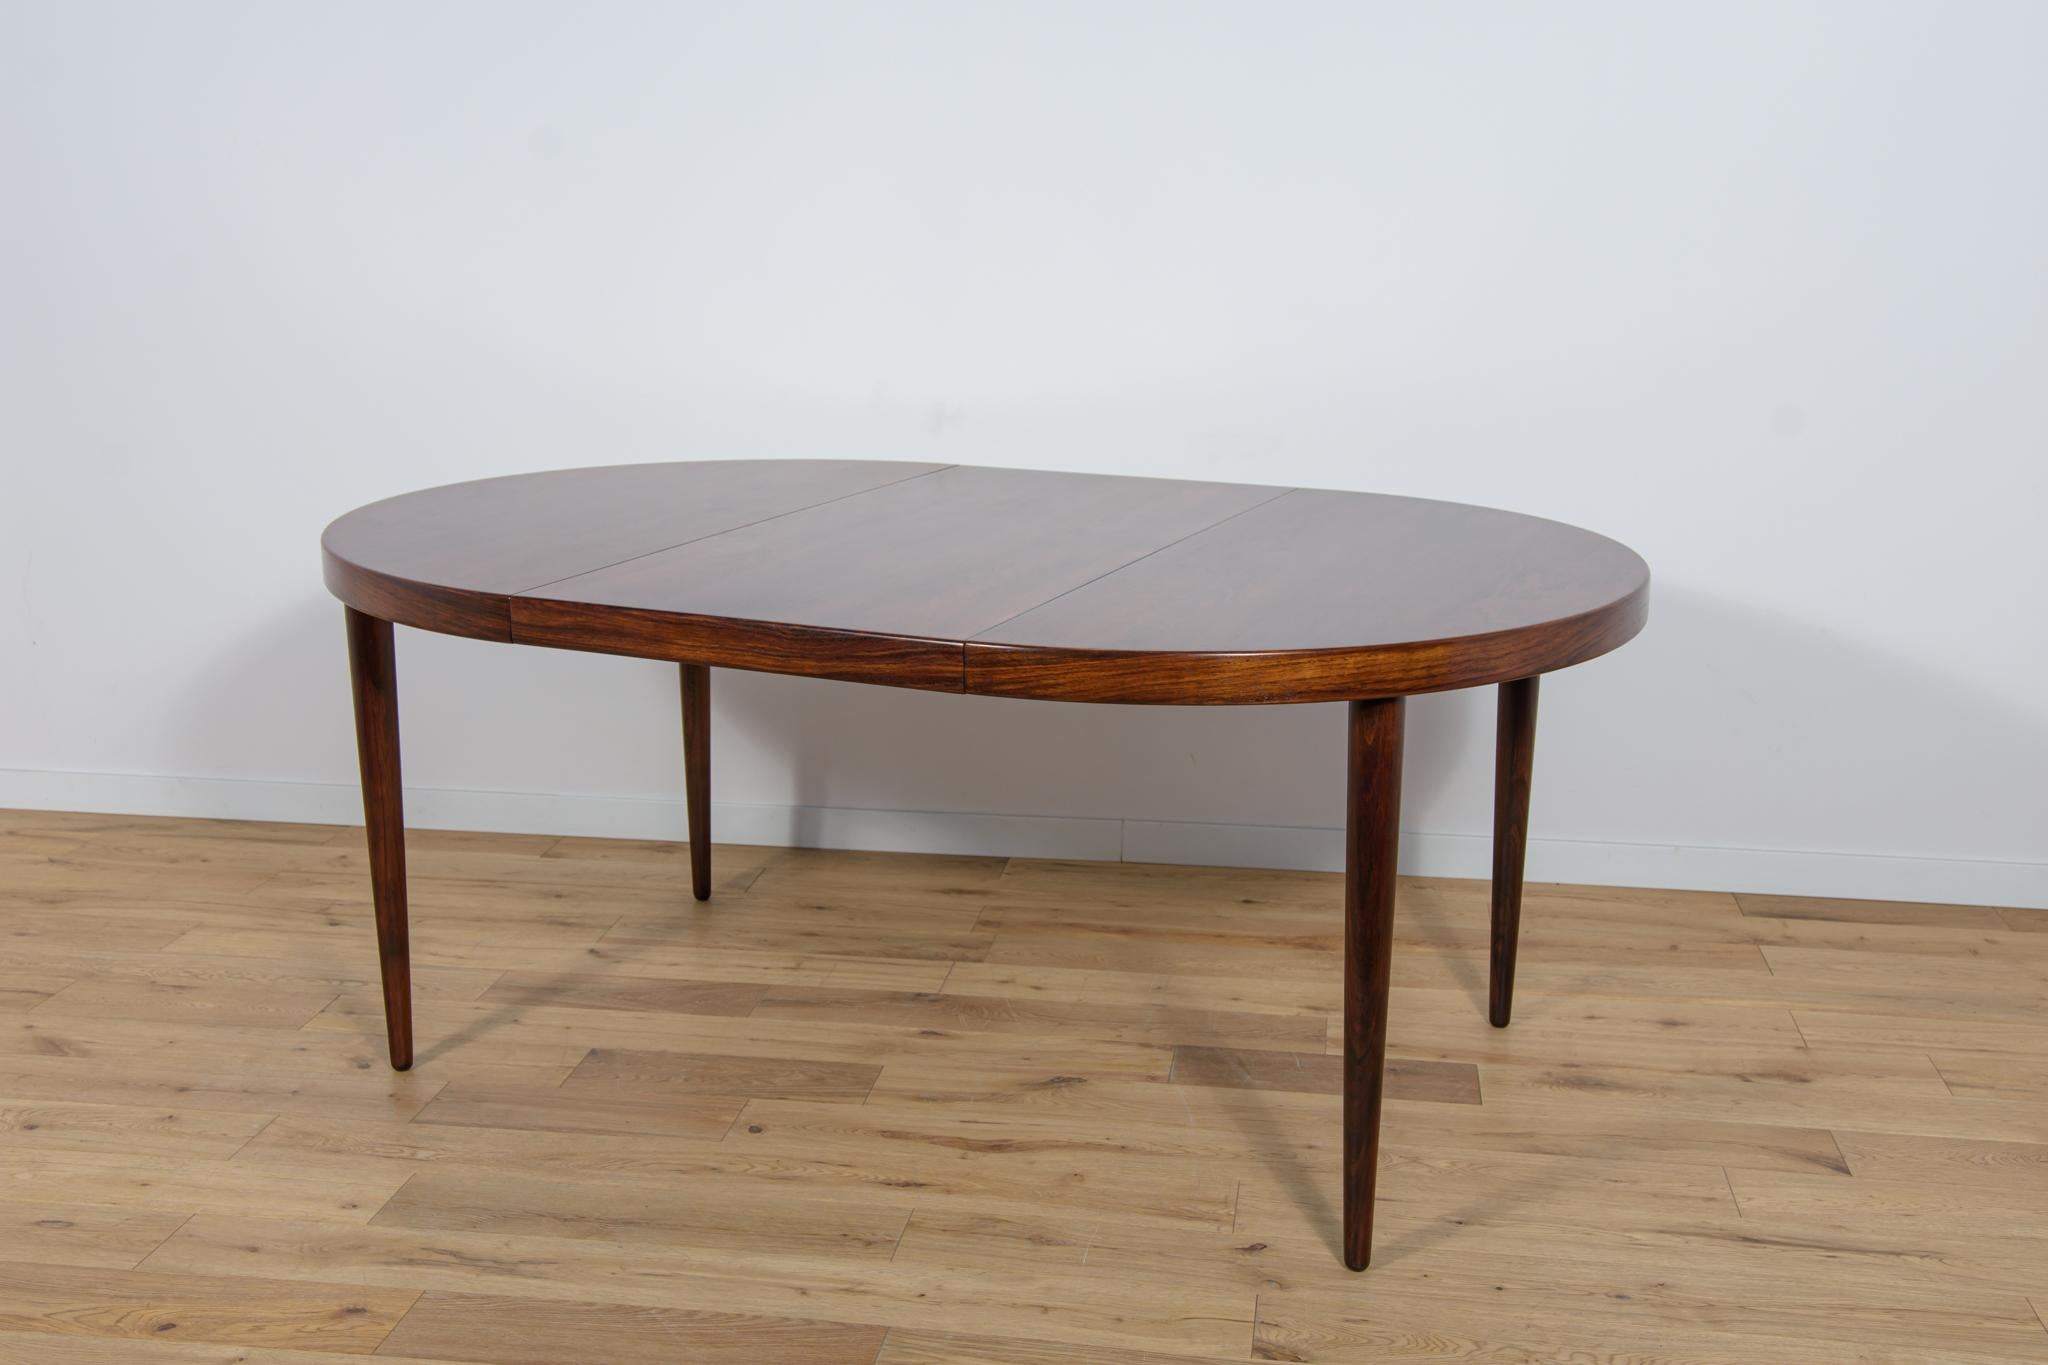  Mid-Century Extendable Rosewood Dining Table by Kai Kristiansen for Feldballes  For Sale 3